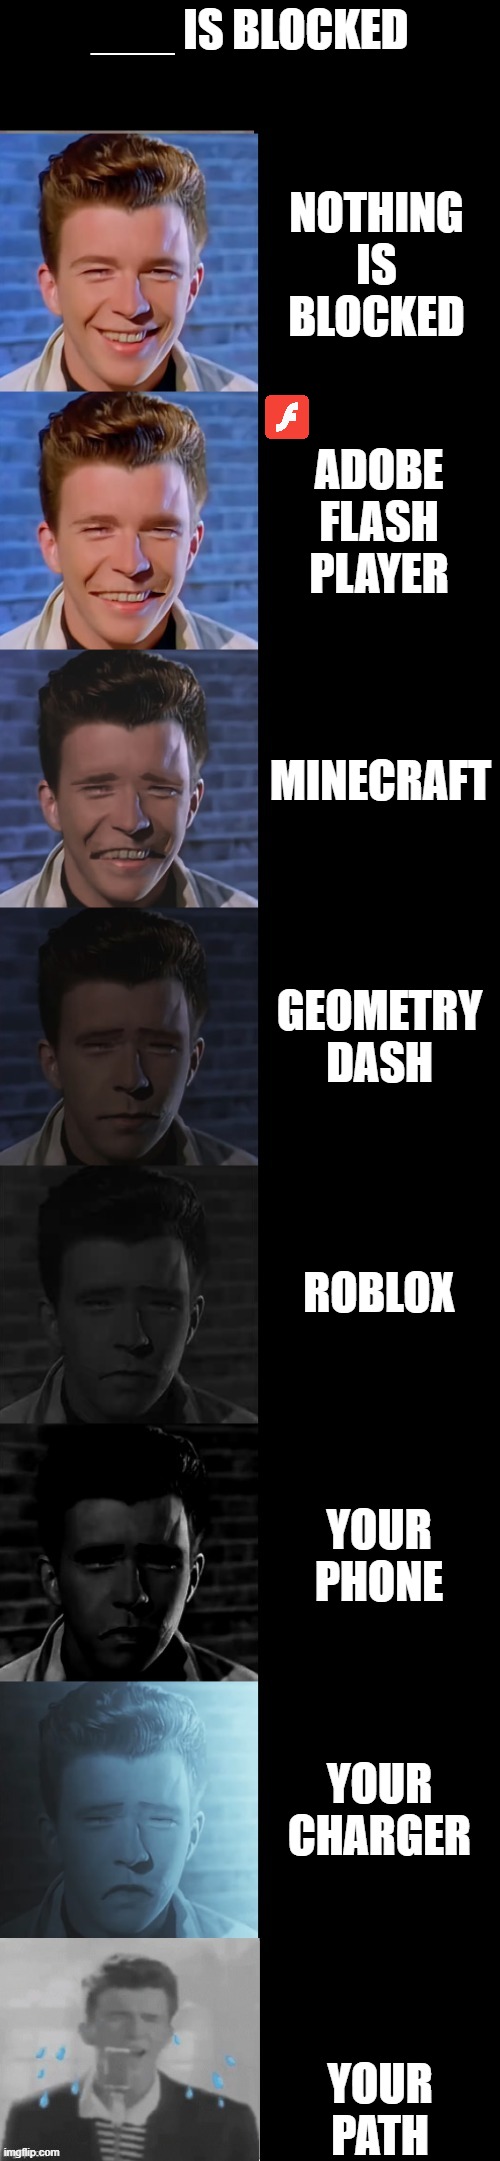 Roblox - flash player